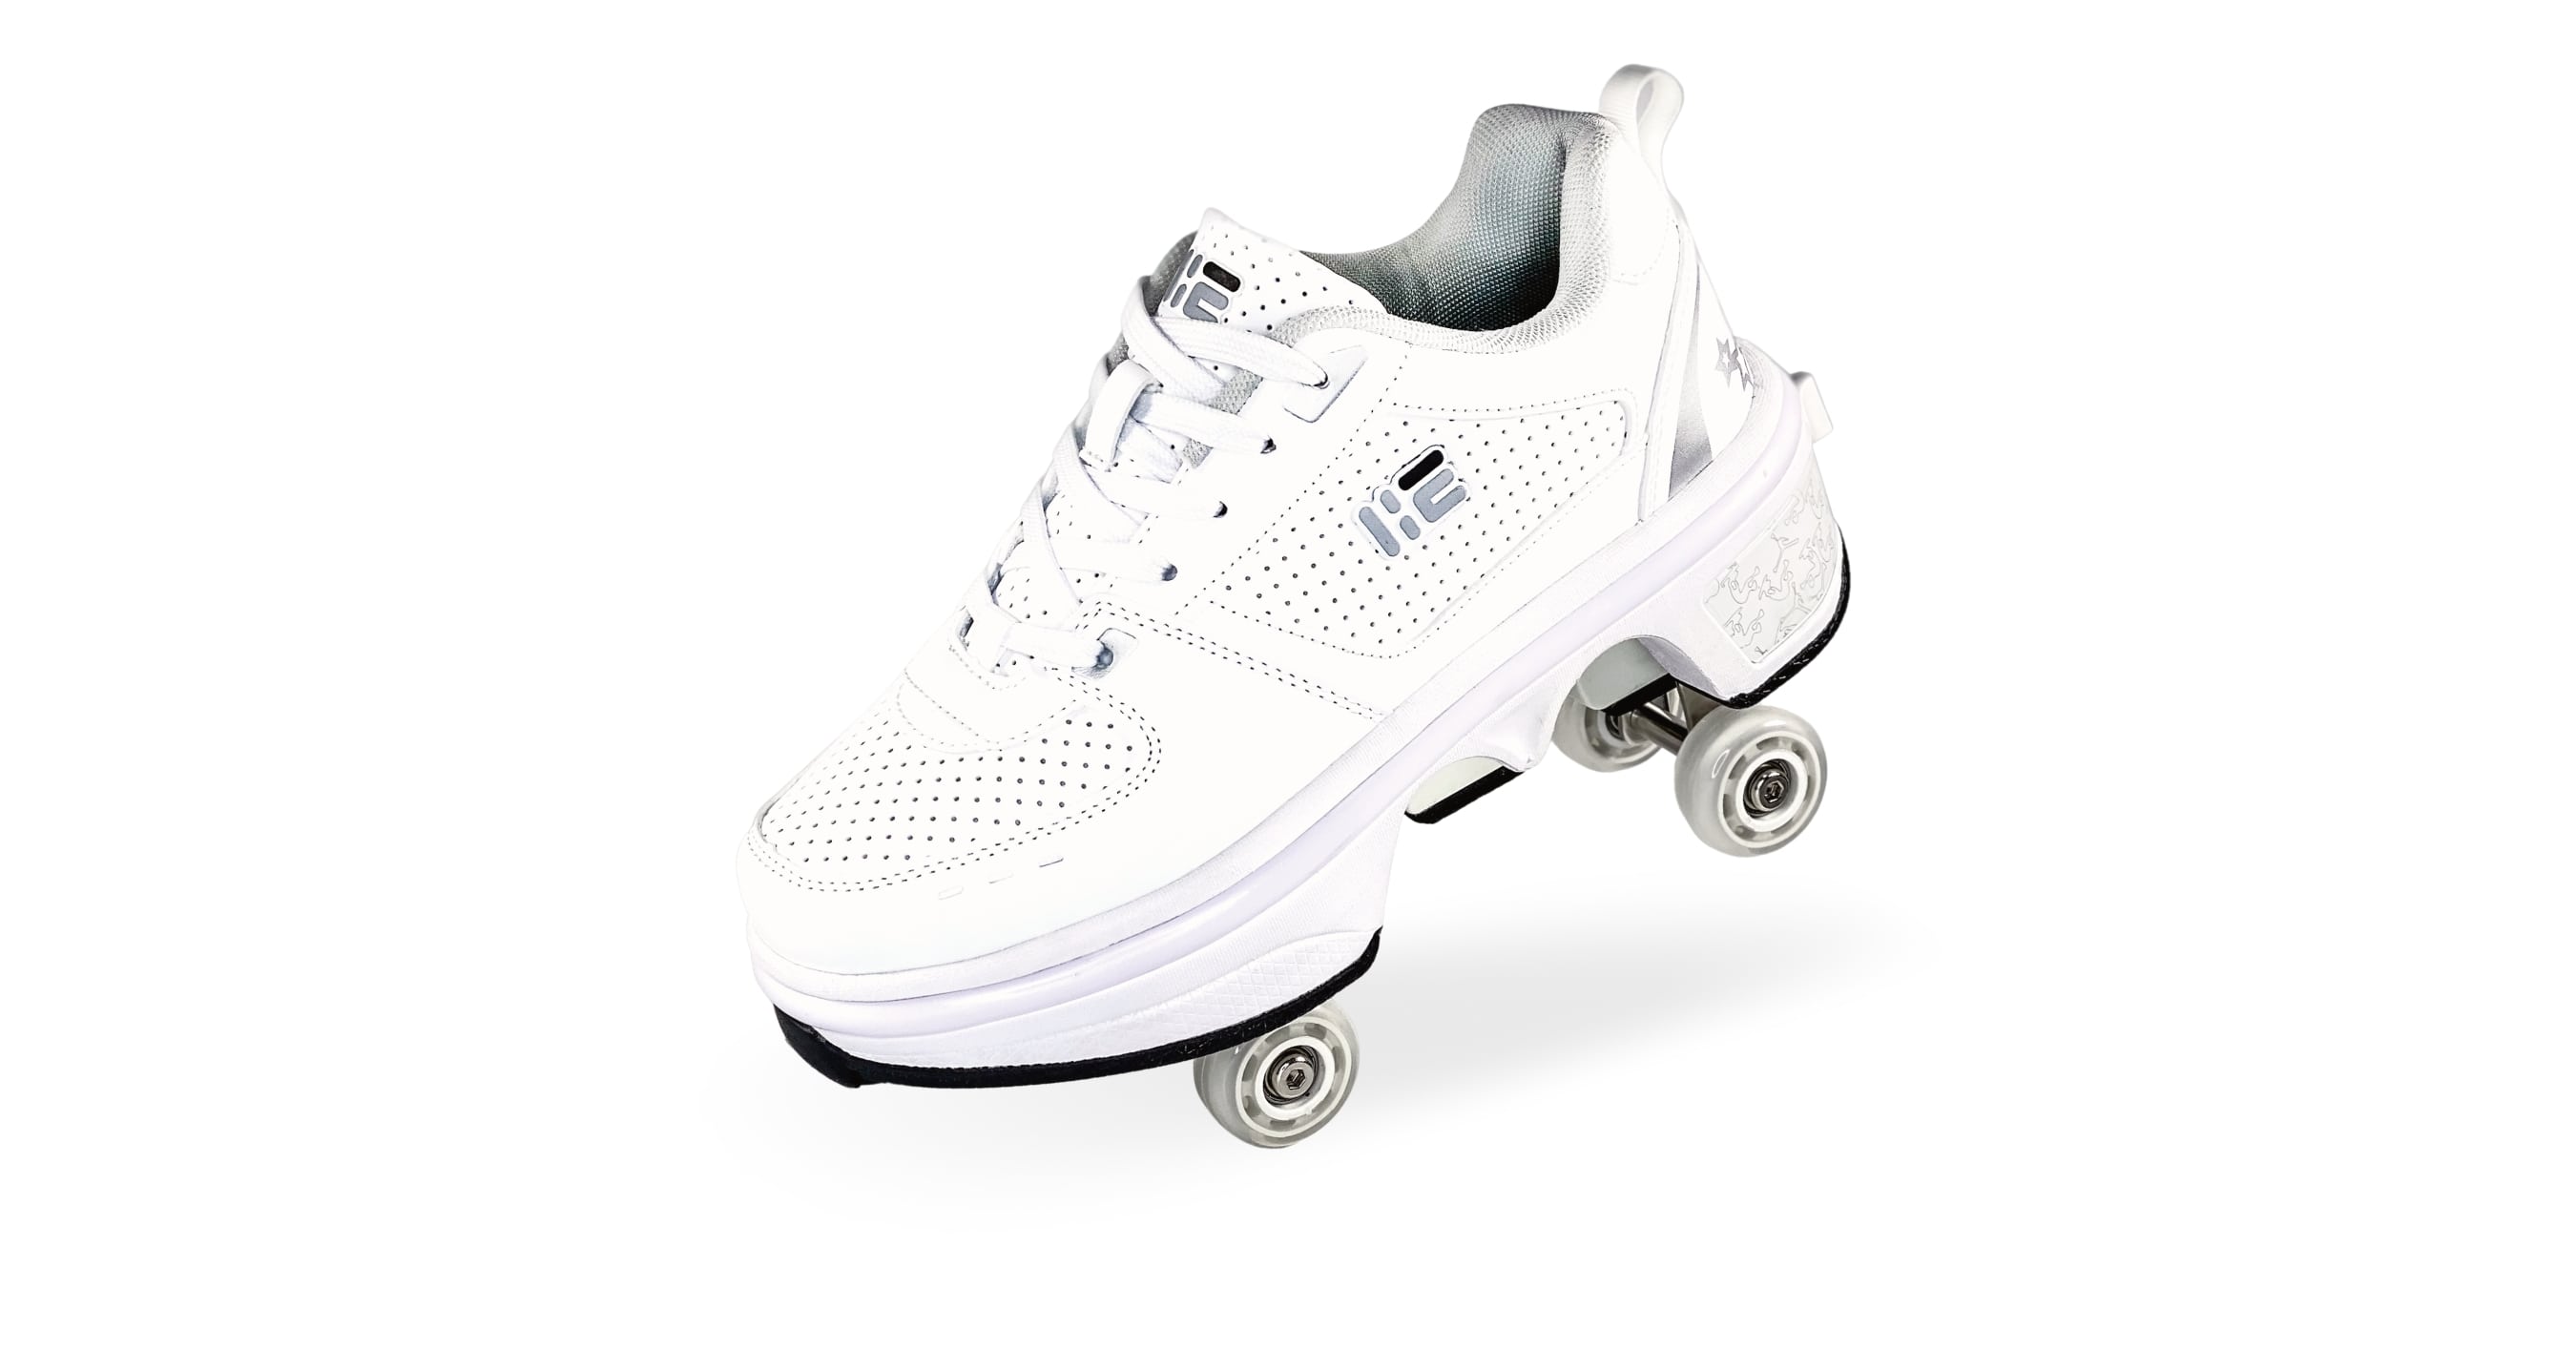 Roller Skate Sneaker 2 in 1, Kick Speed - Classic White Low LED (Women's)